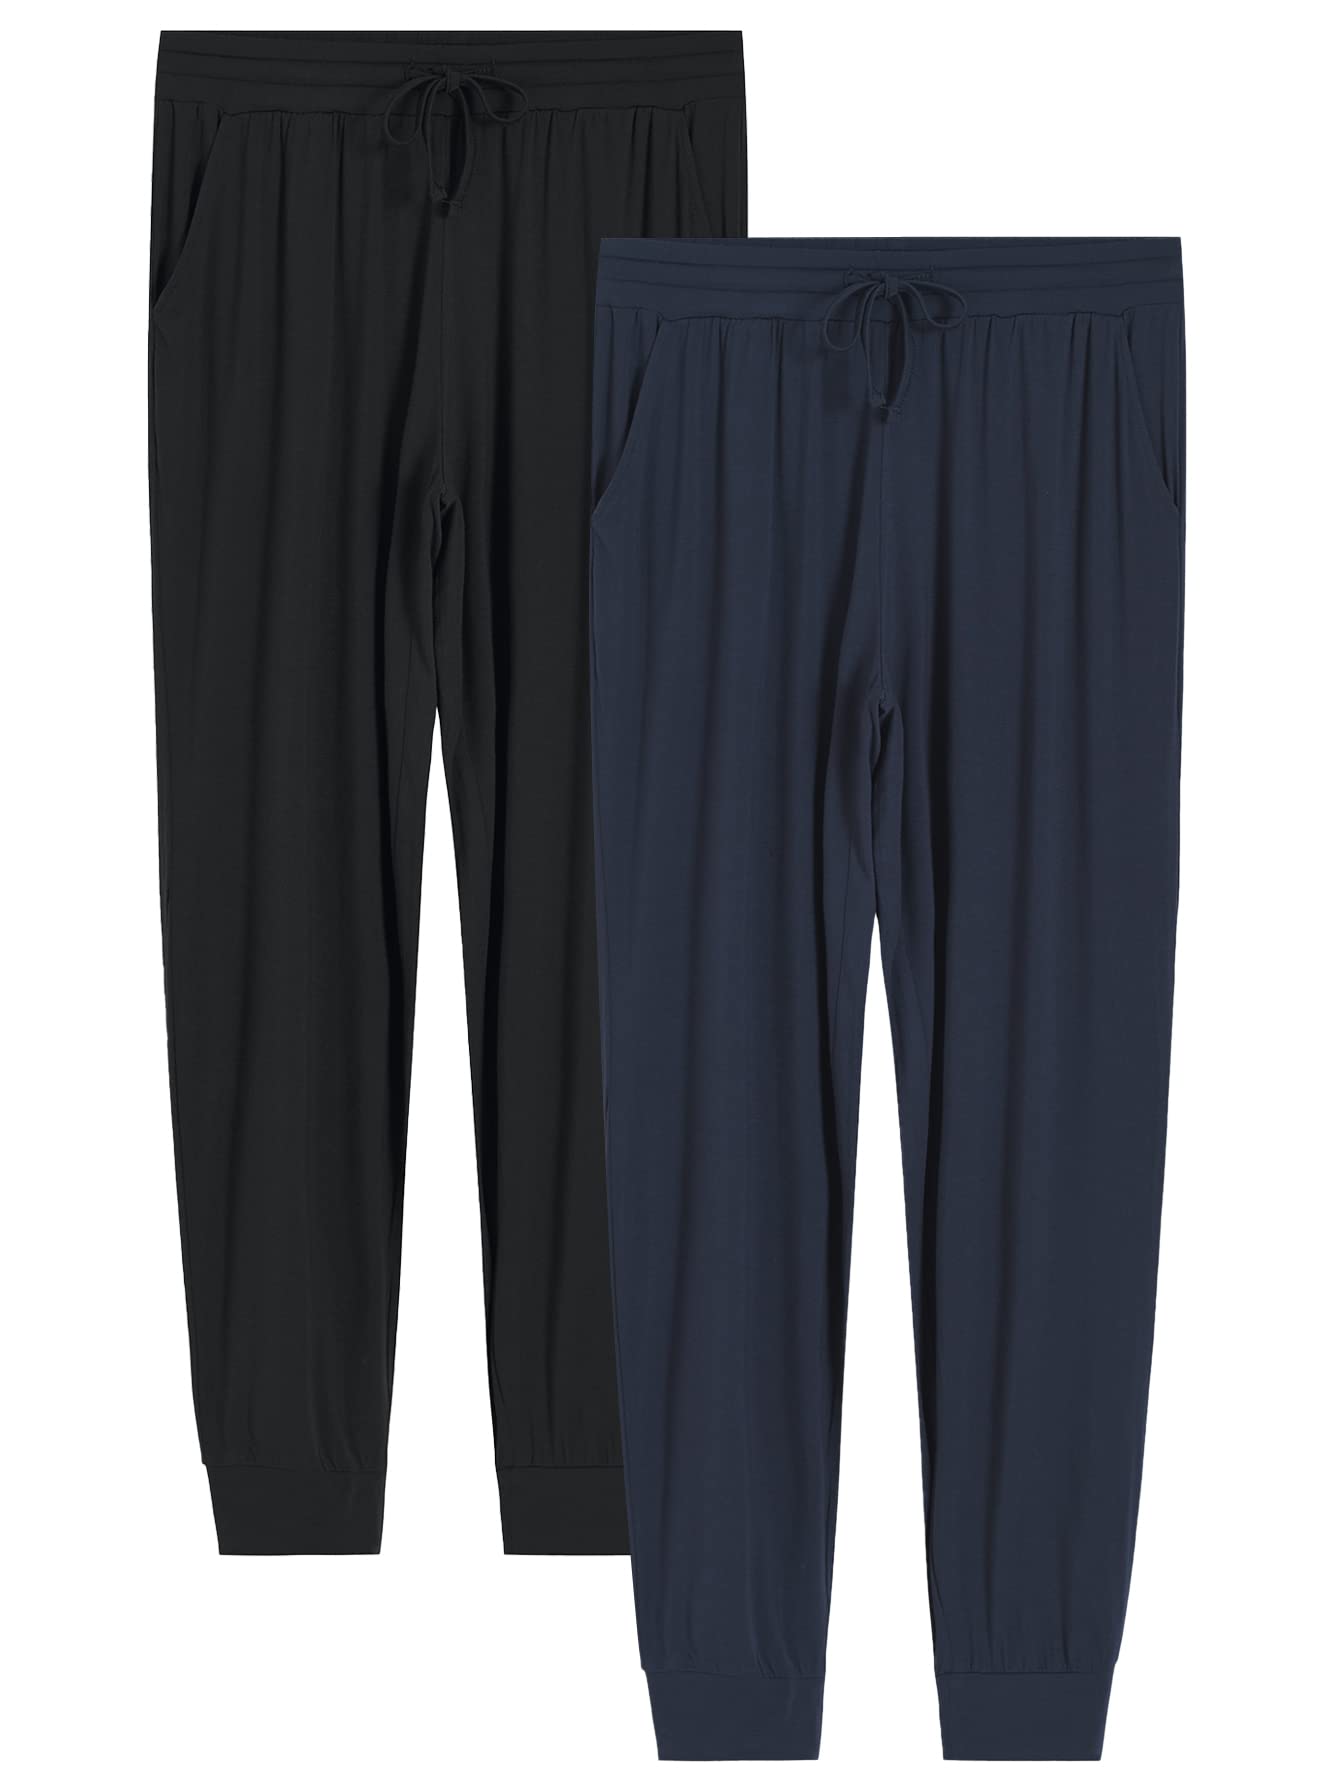 Women's Soft Sleep Pajama Shorts – Latuza